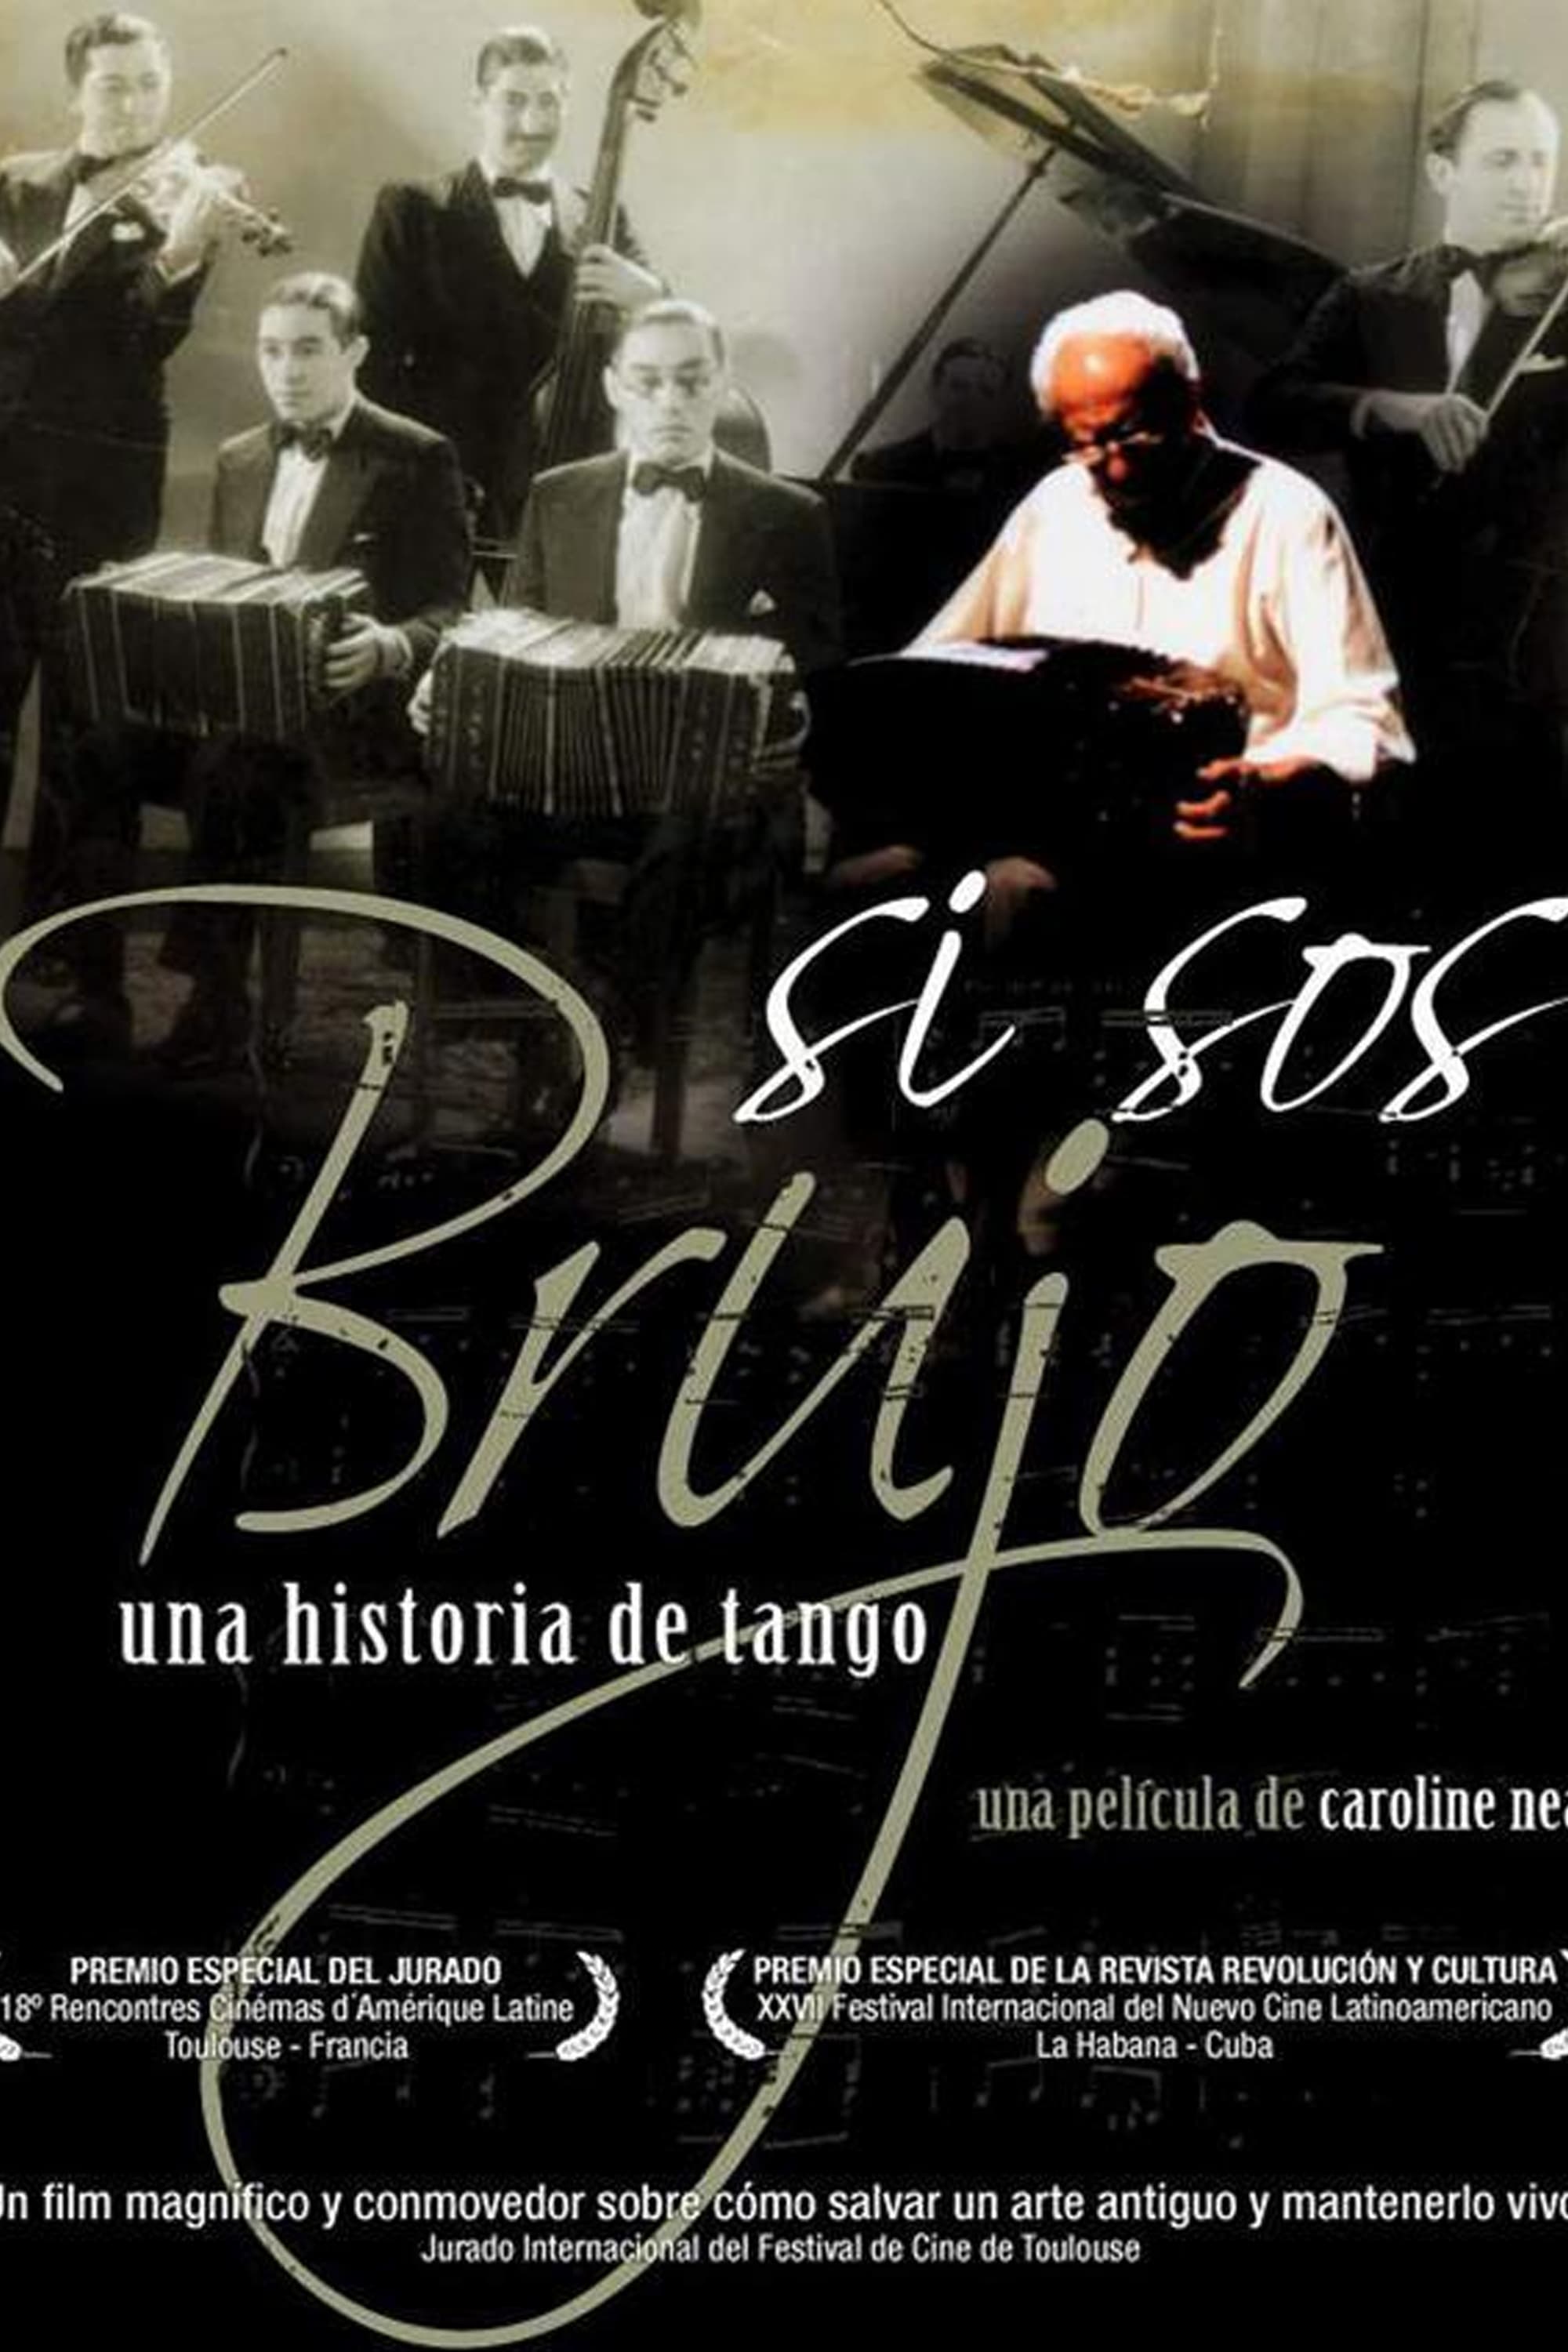 Si Sos Brujo: A Tango Story